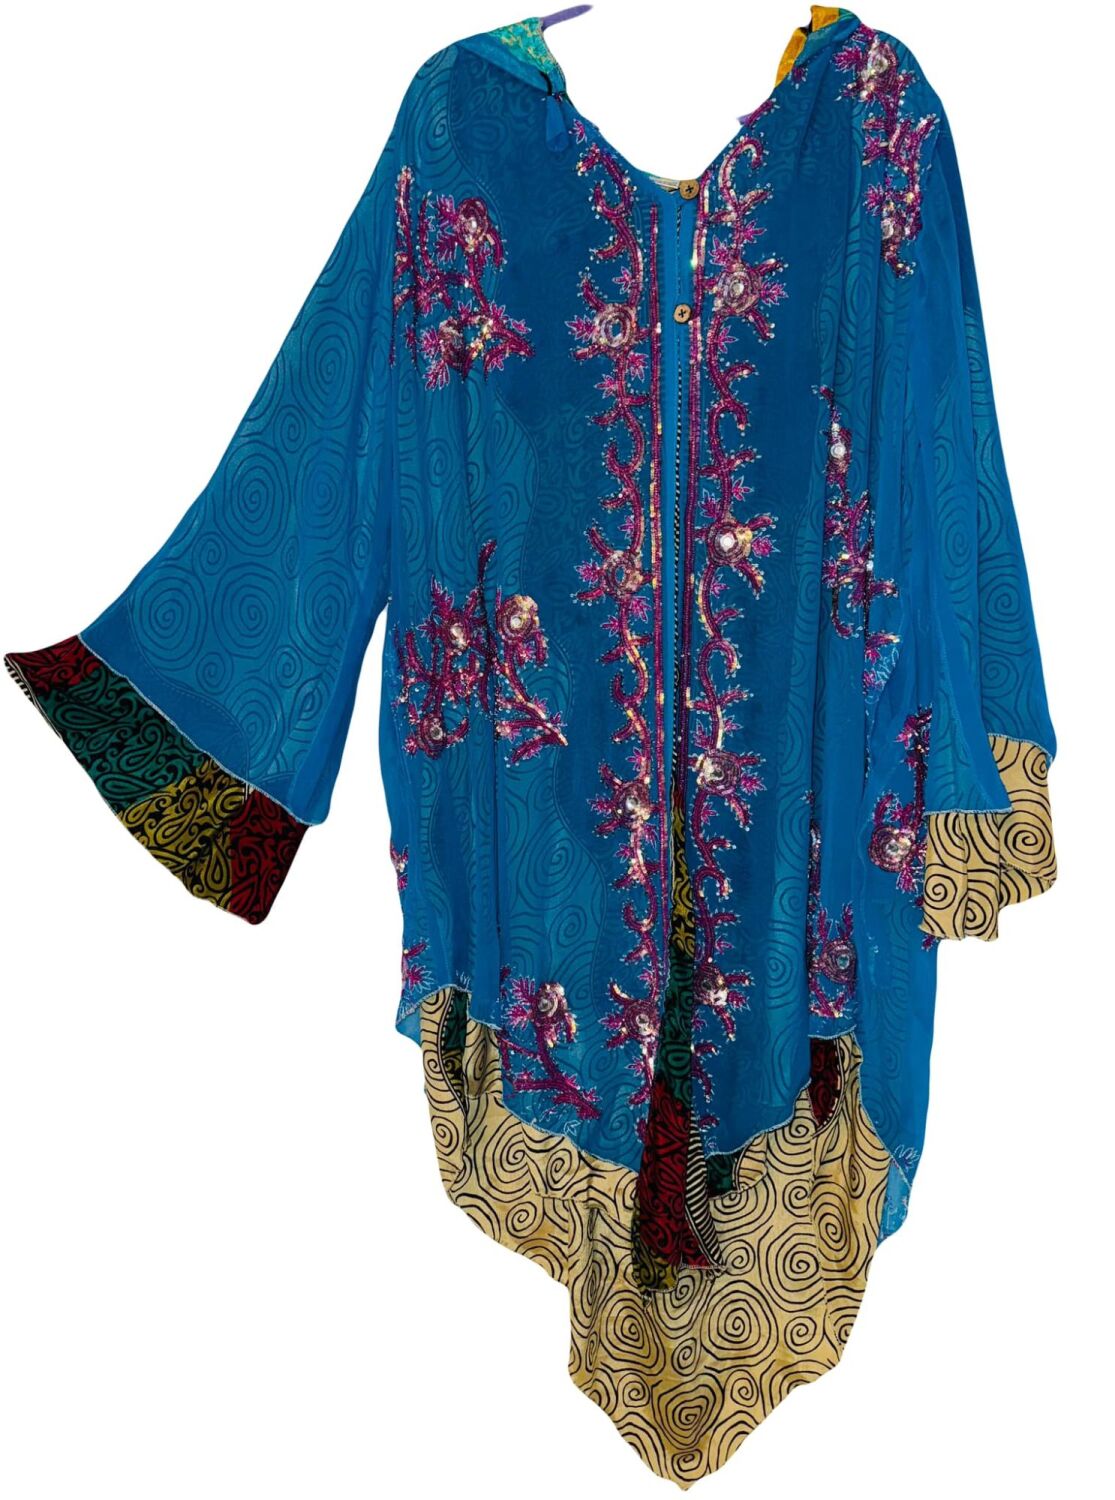 Louanna-Sunshine decorated sari pixie hood jacket